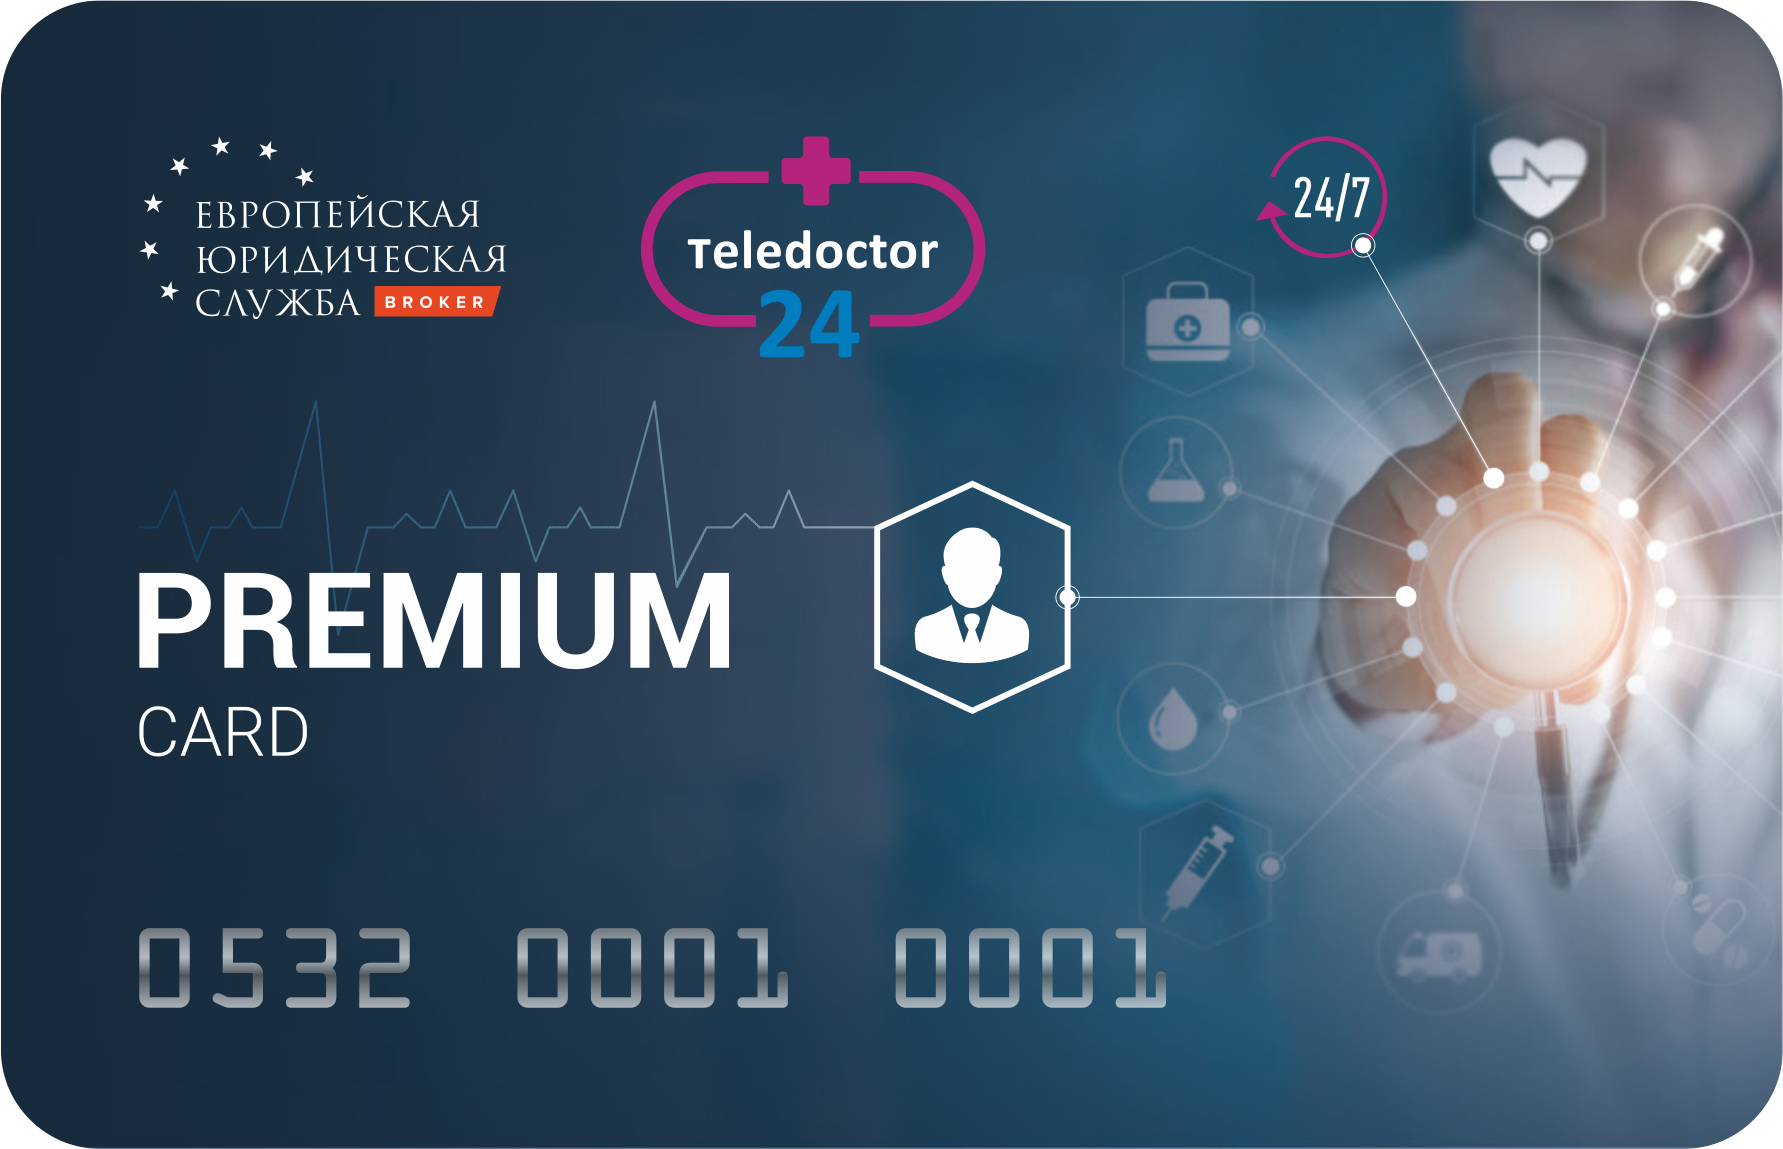 Теледоктор24 Premium